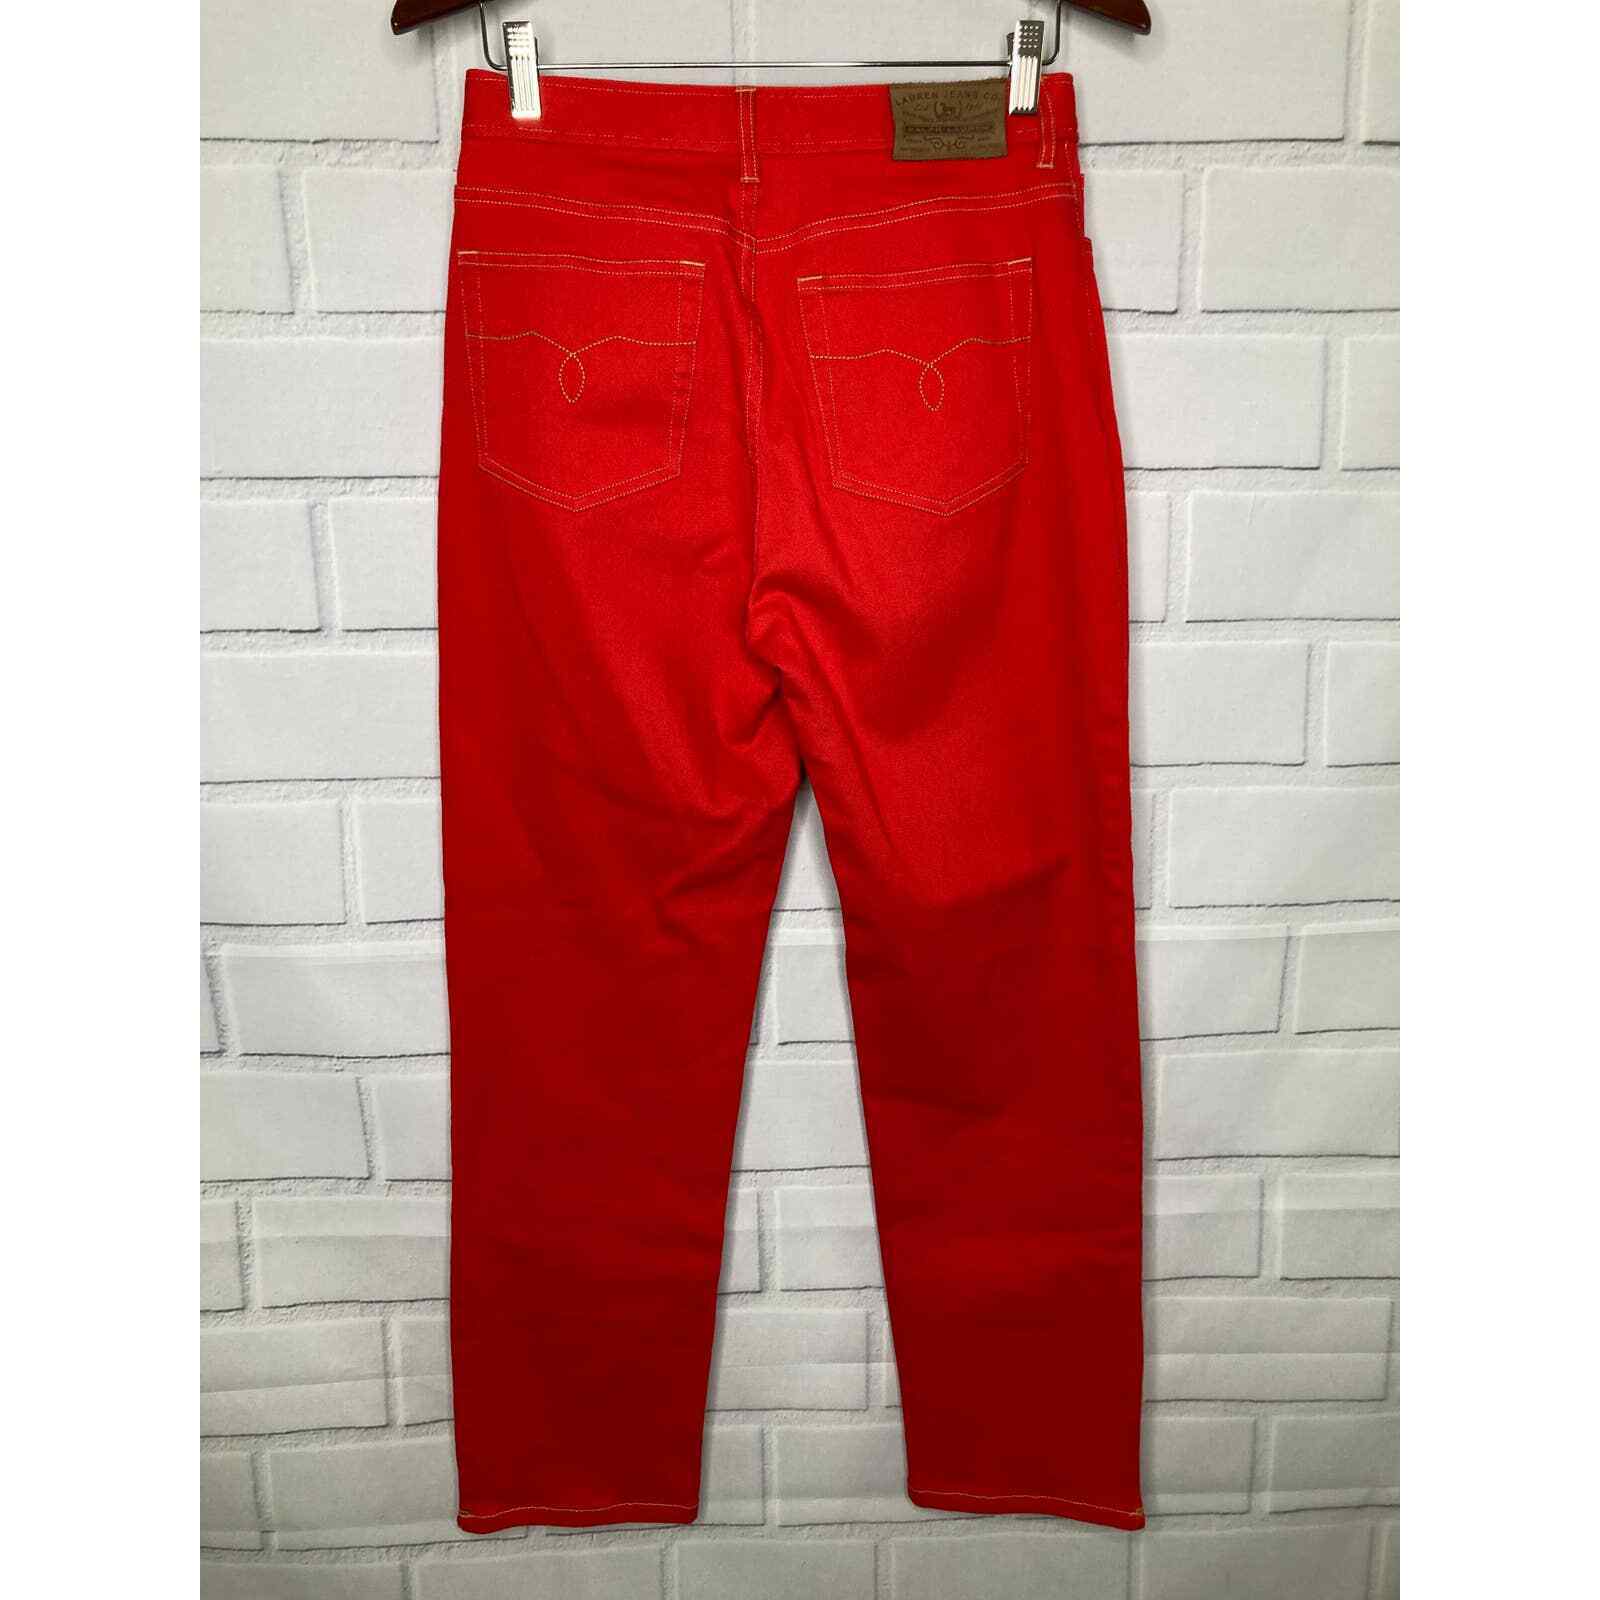 Lauren Jeans Co. Ralph Lauren Red Tapered Jeans size 6